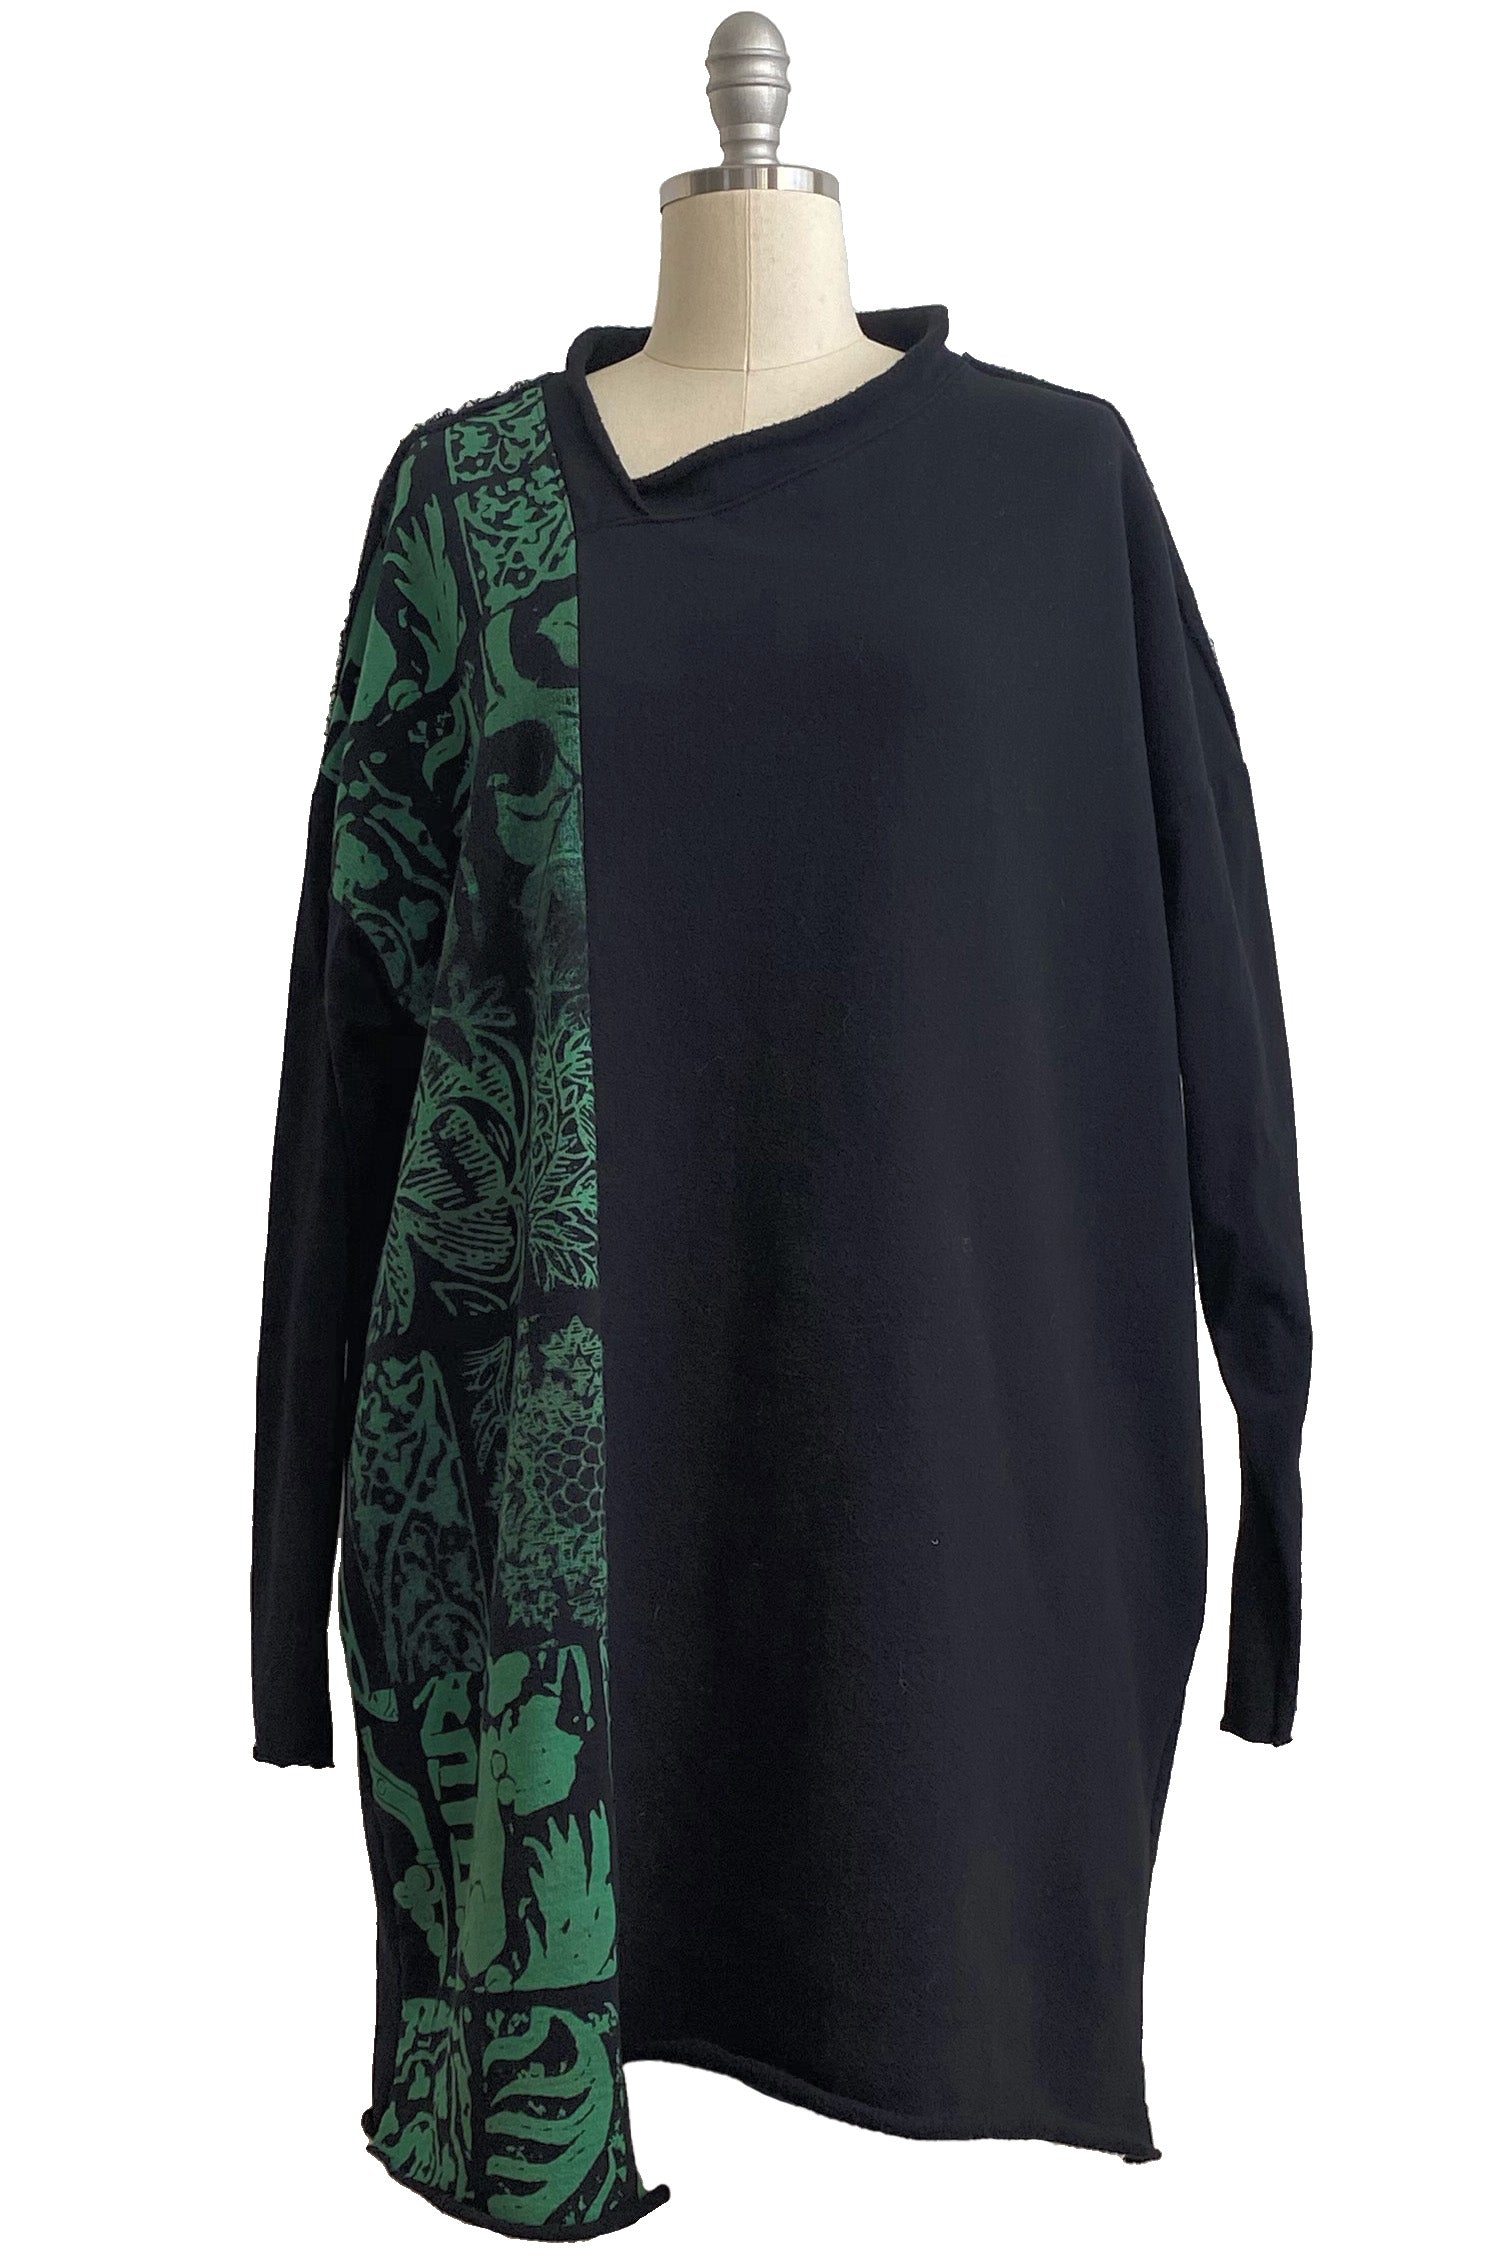 Petra Long Sleeve Tunic Knit w/ Tile Print - Black & Green Overdye - Meduim